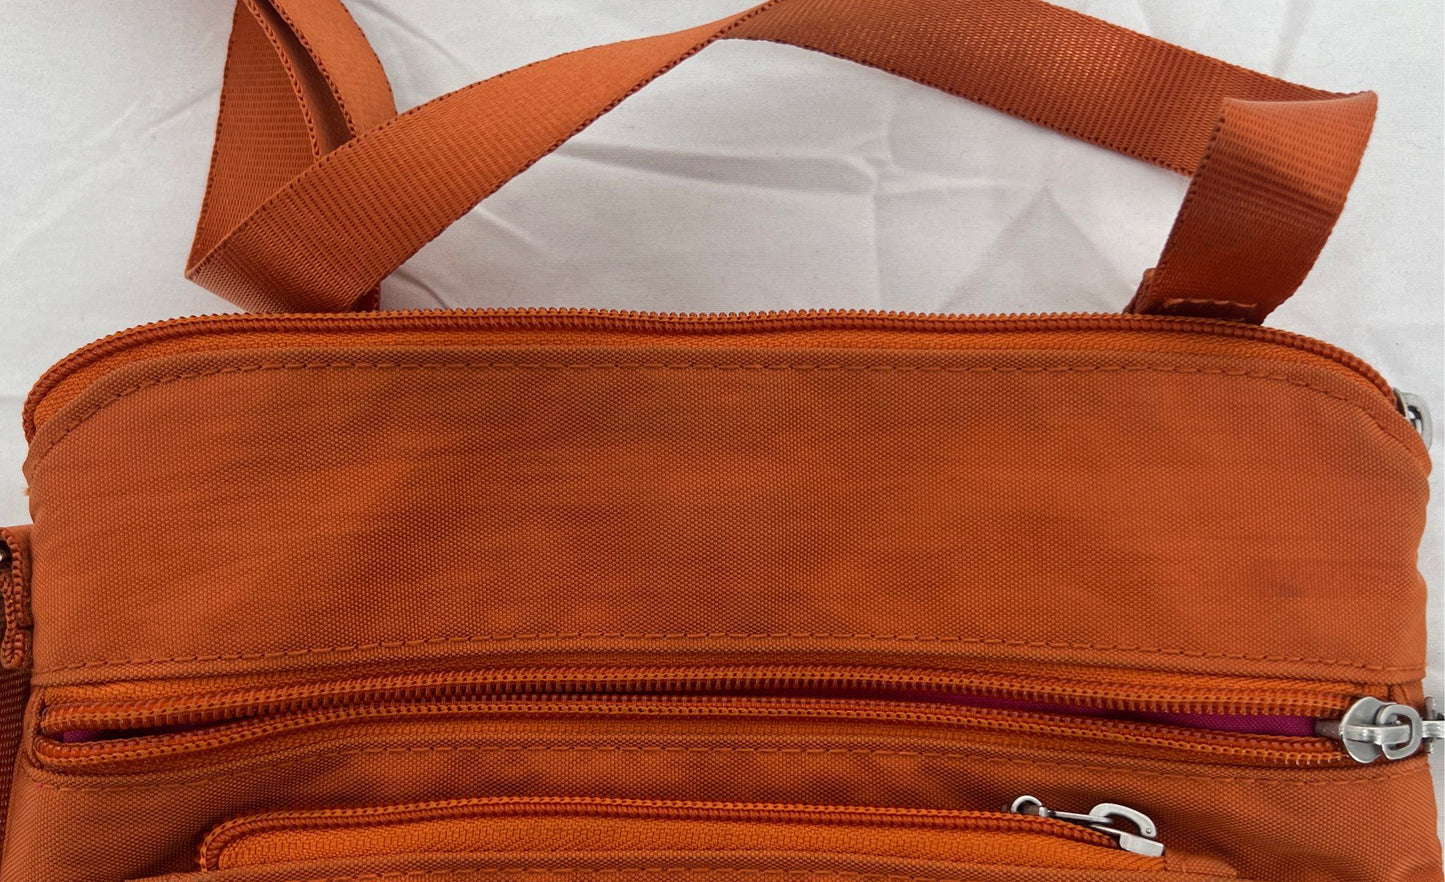 Baggallini Crossbody Bag Orange-Nylon Travel Purse-Lots Of Pockets/Compartments